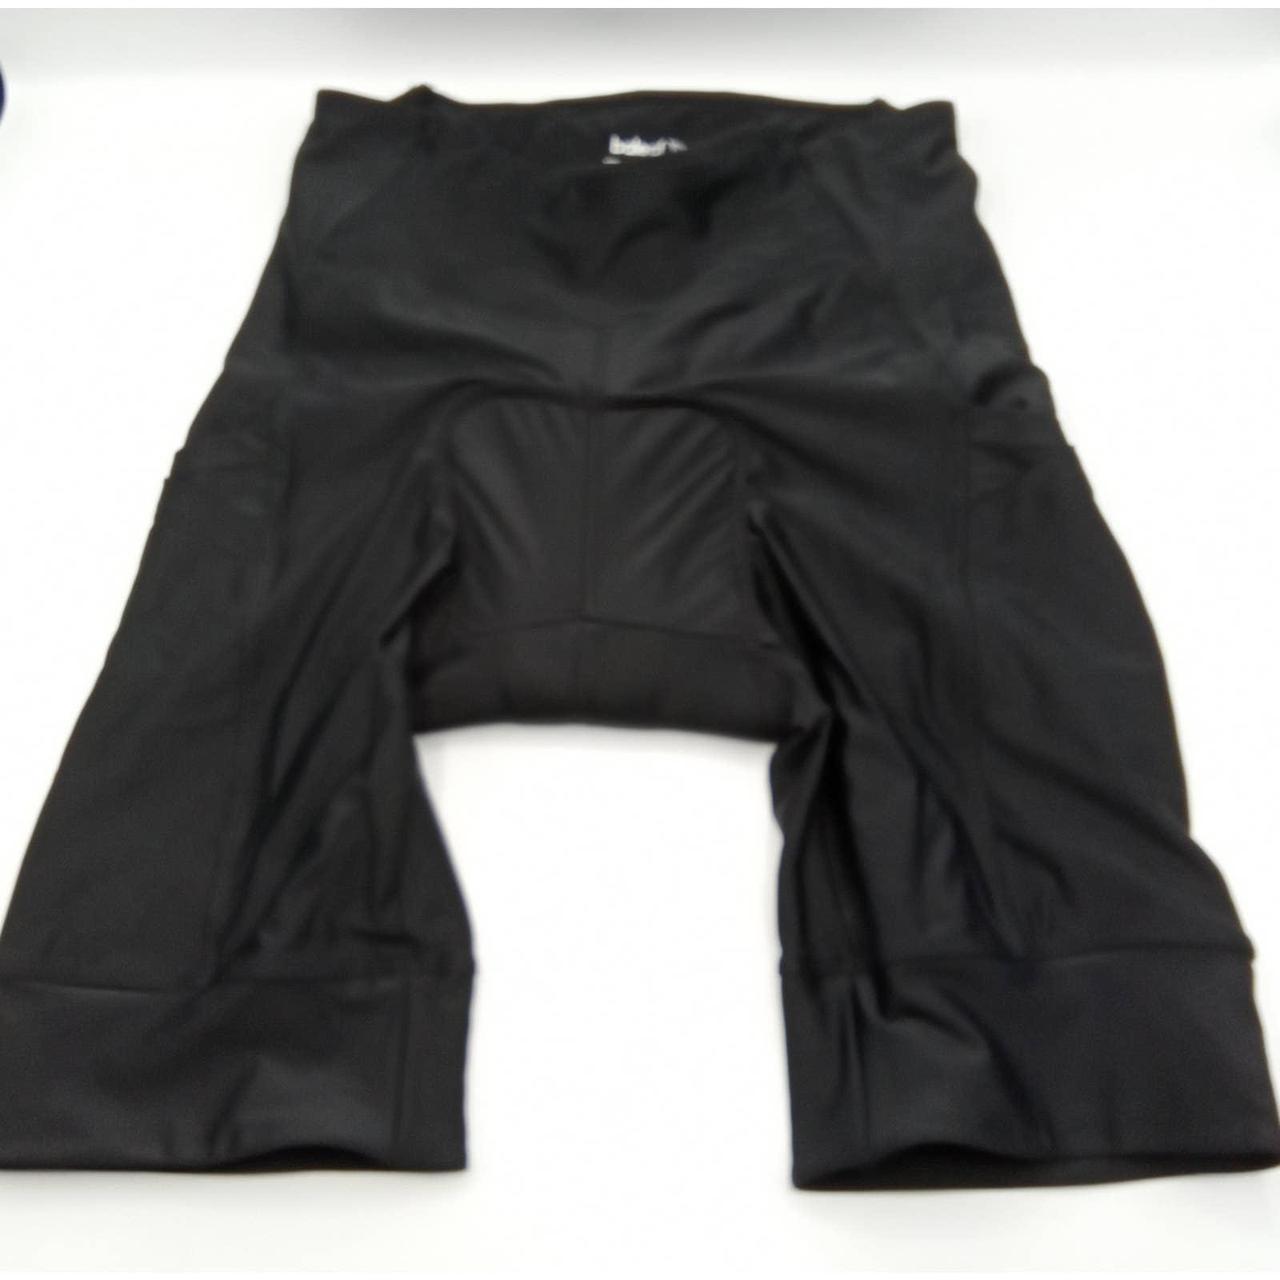 Short Pants from Baleaf for Women in Black